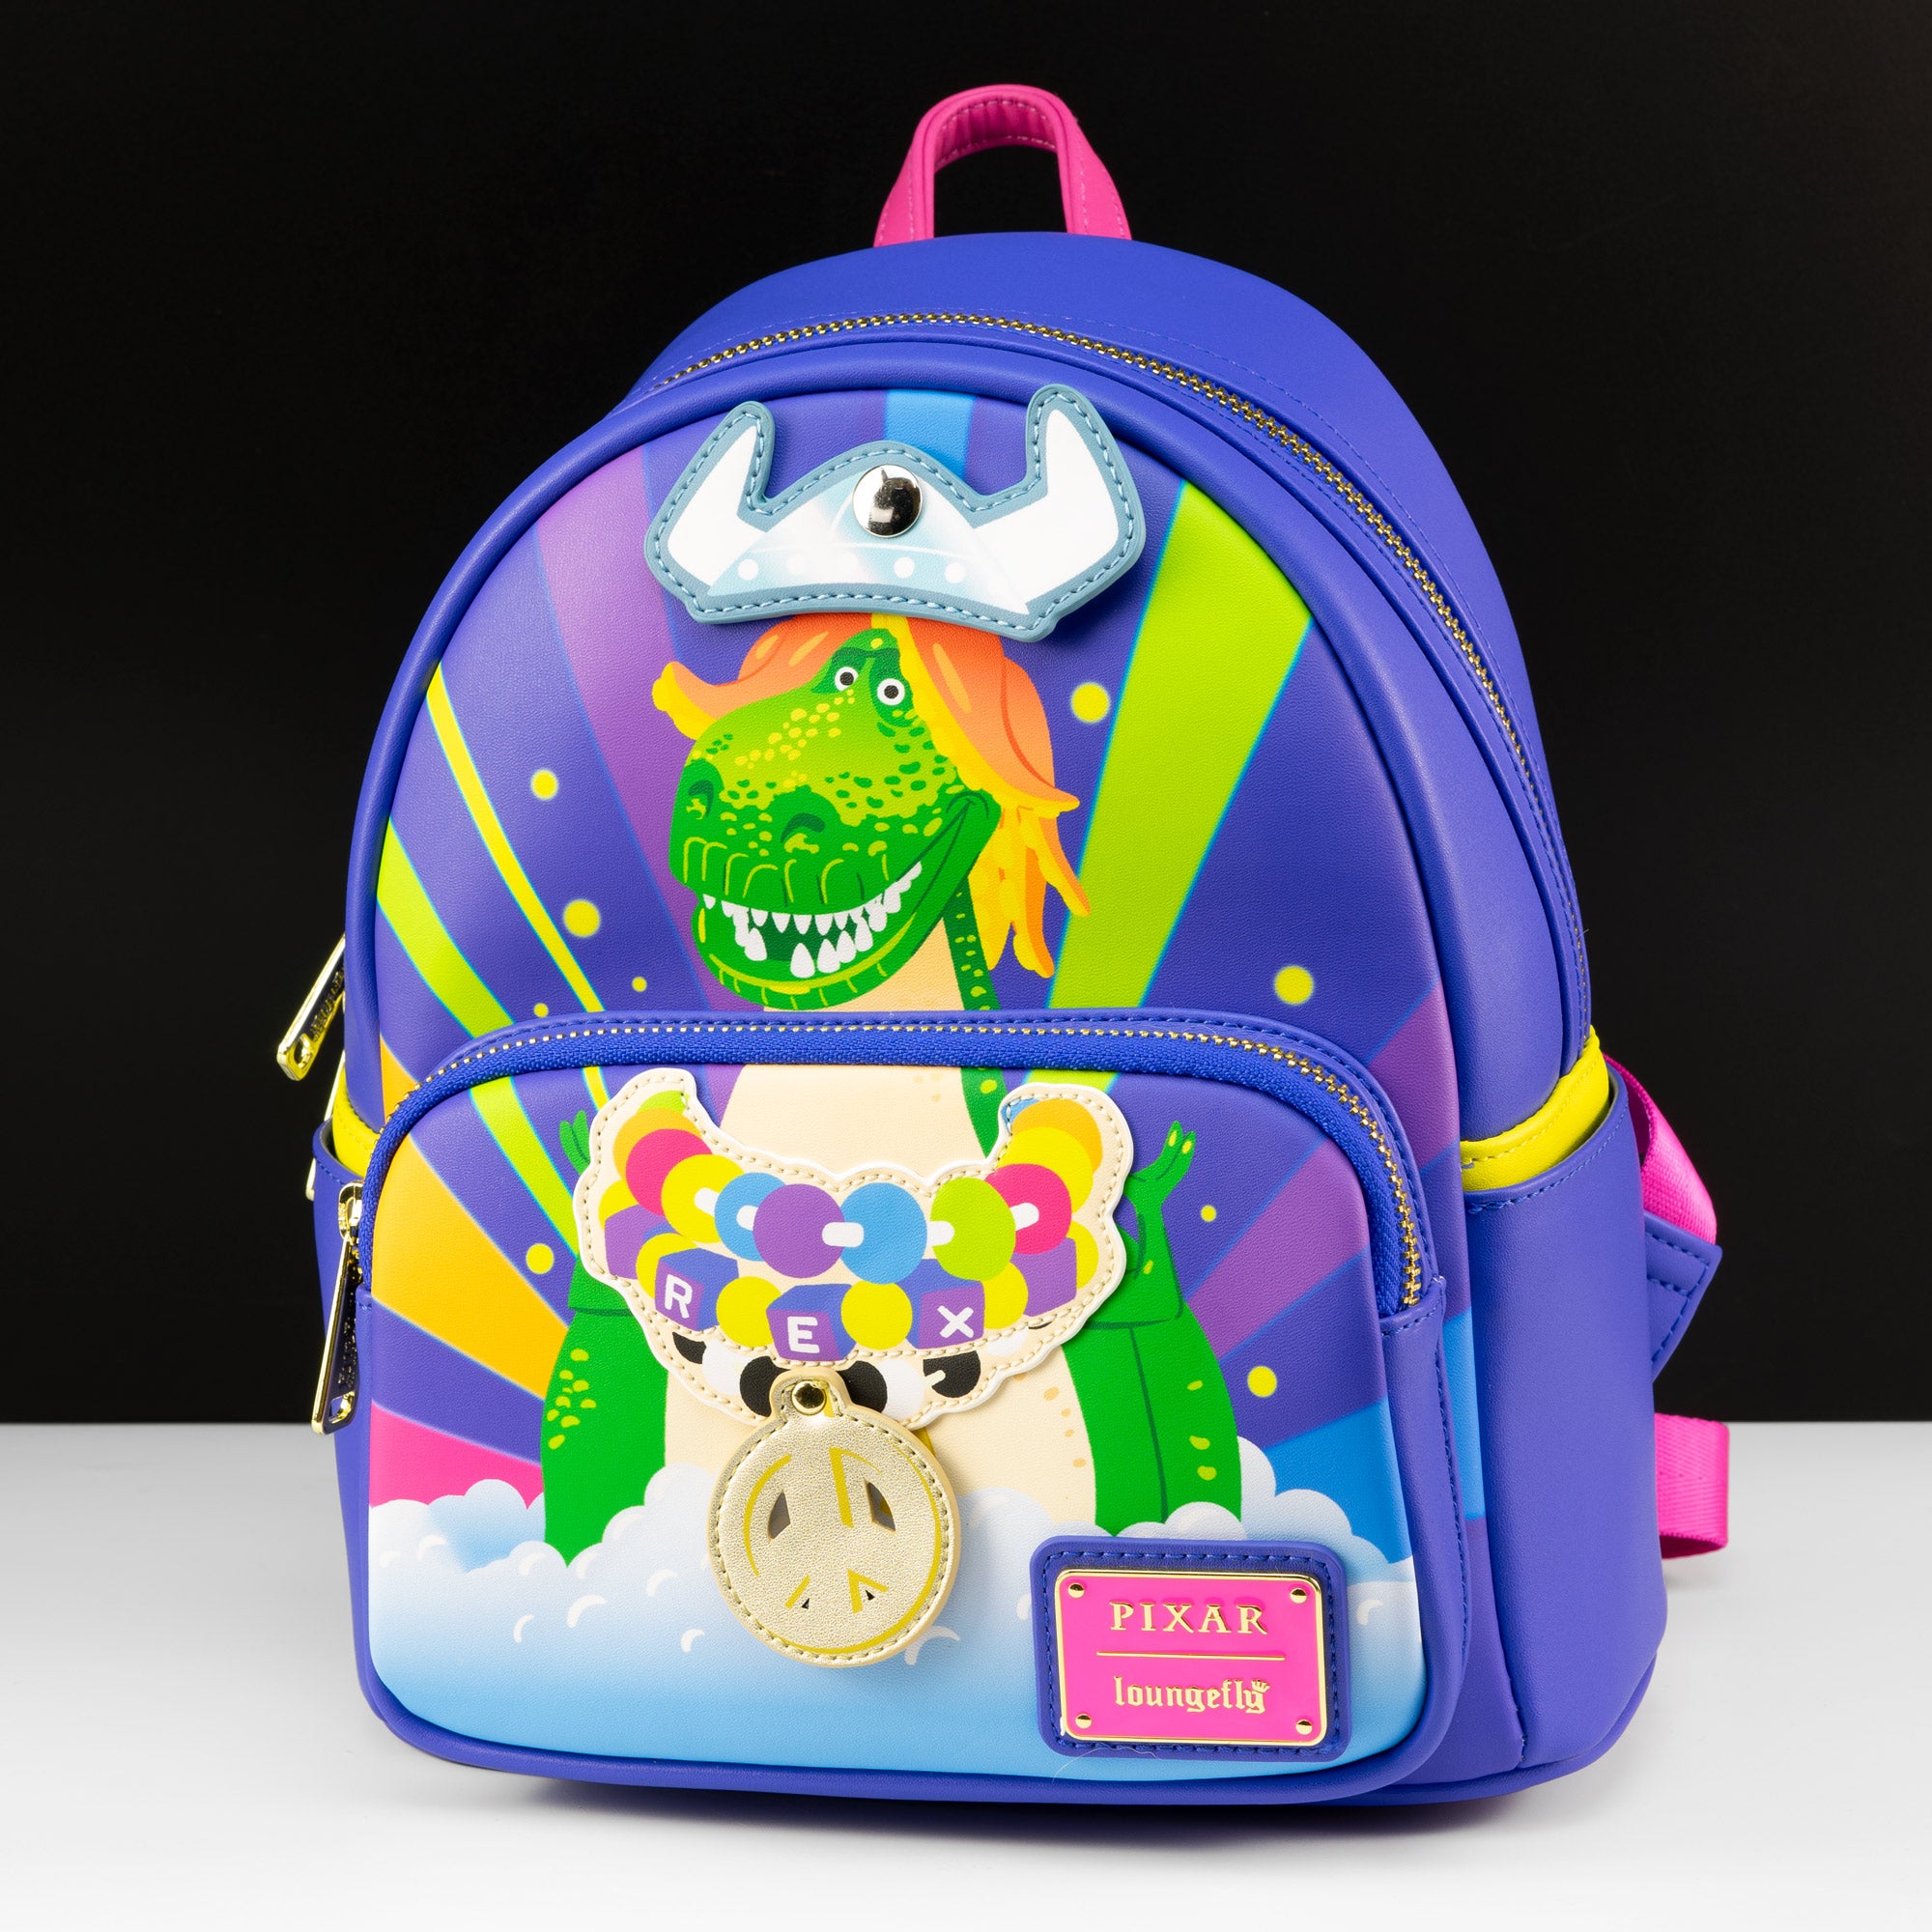 Loungefly x Disney Pixar Toy Story Partysaurus Rex Mini Backpack